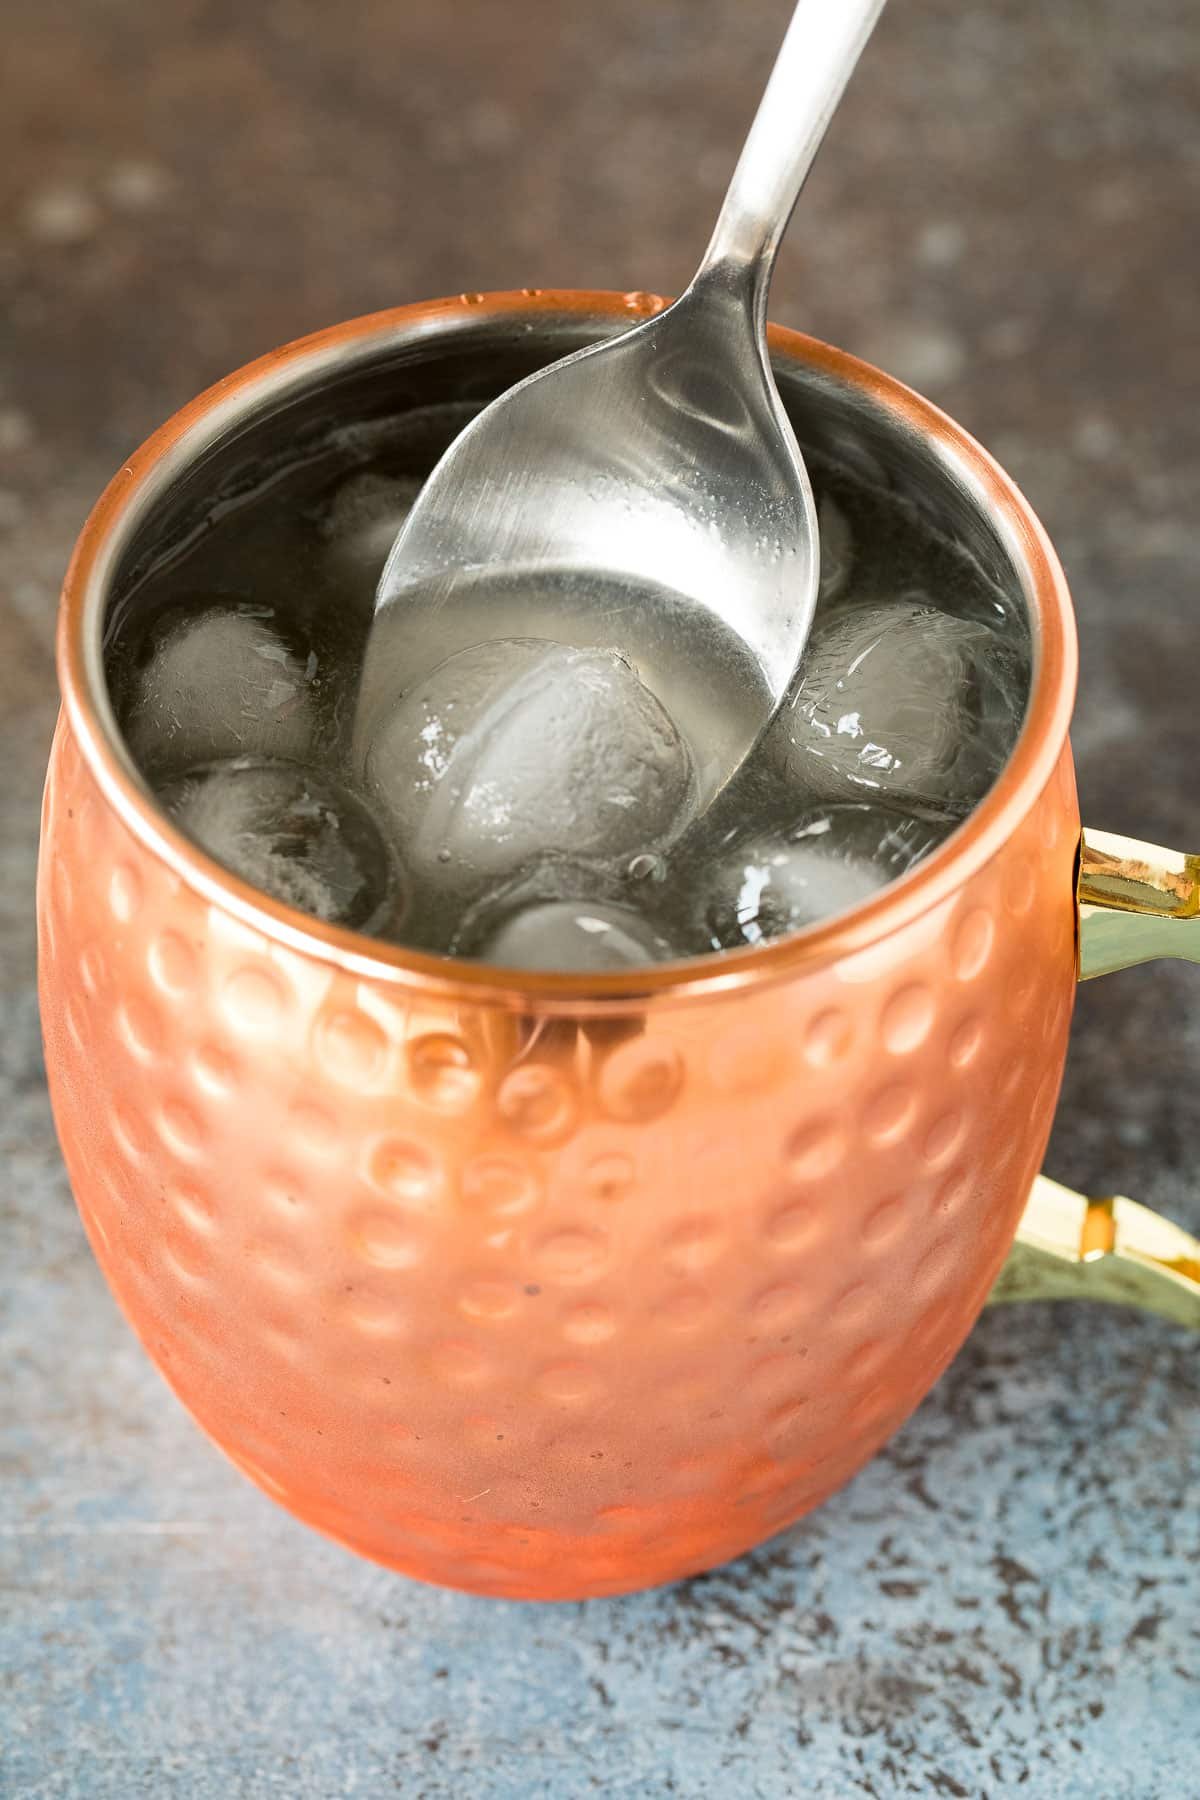 A spoon stirring a mule drink.